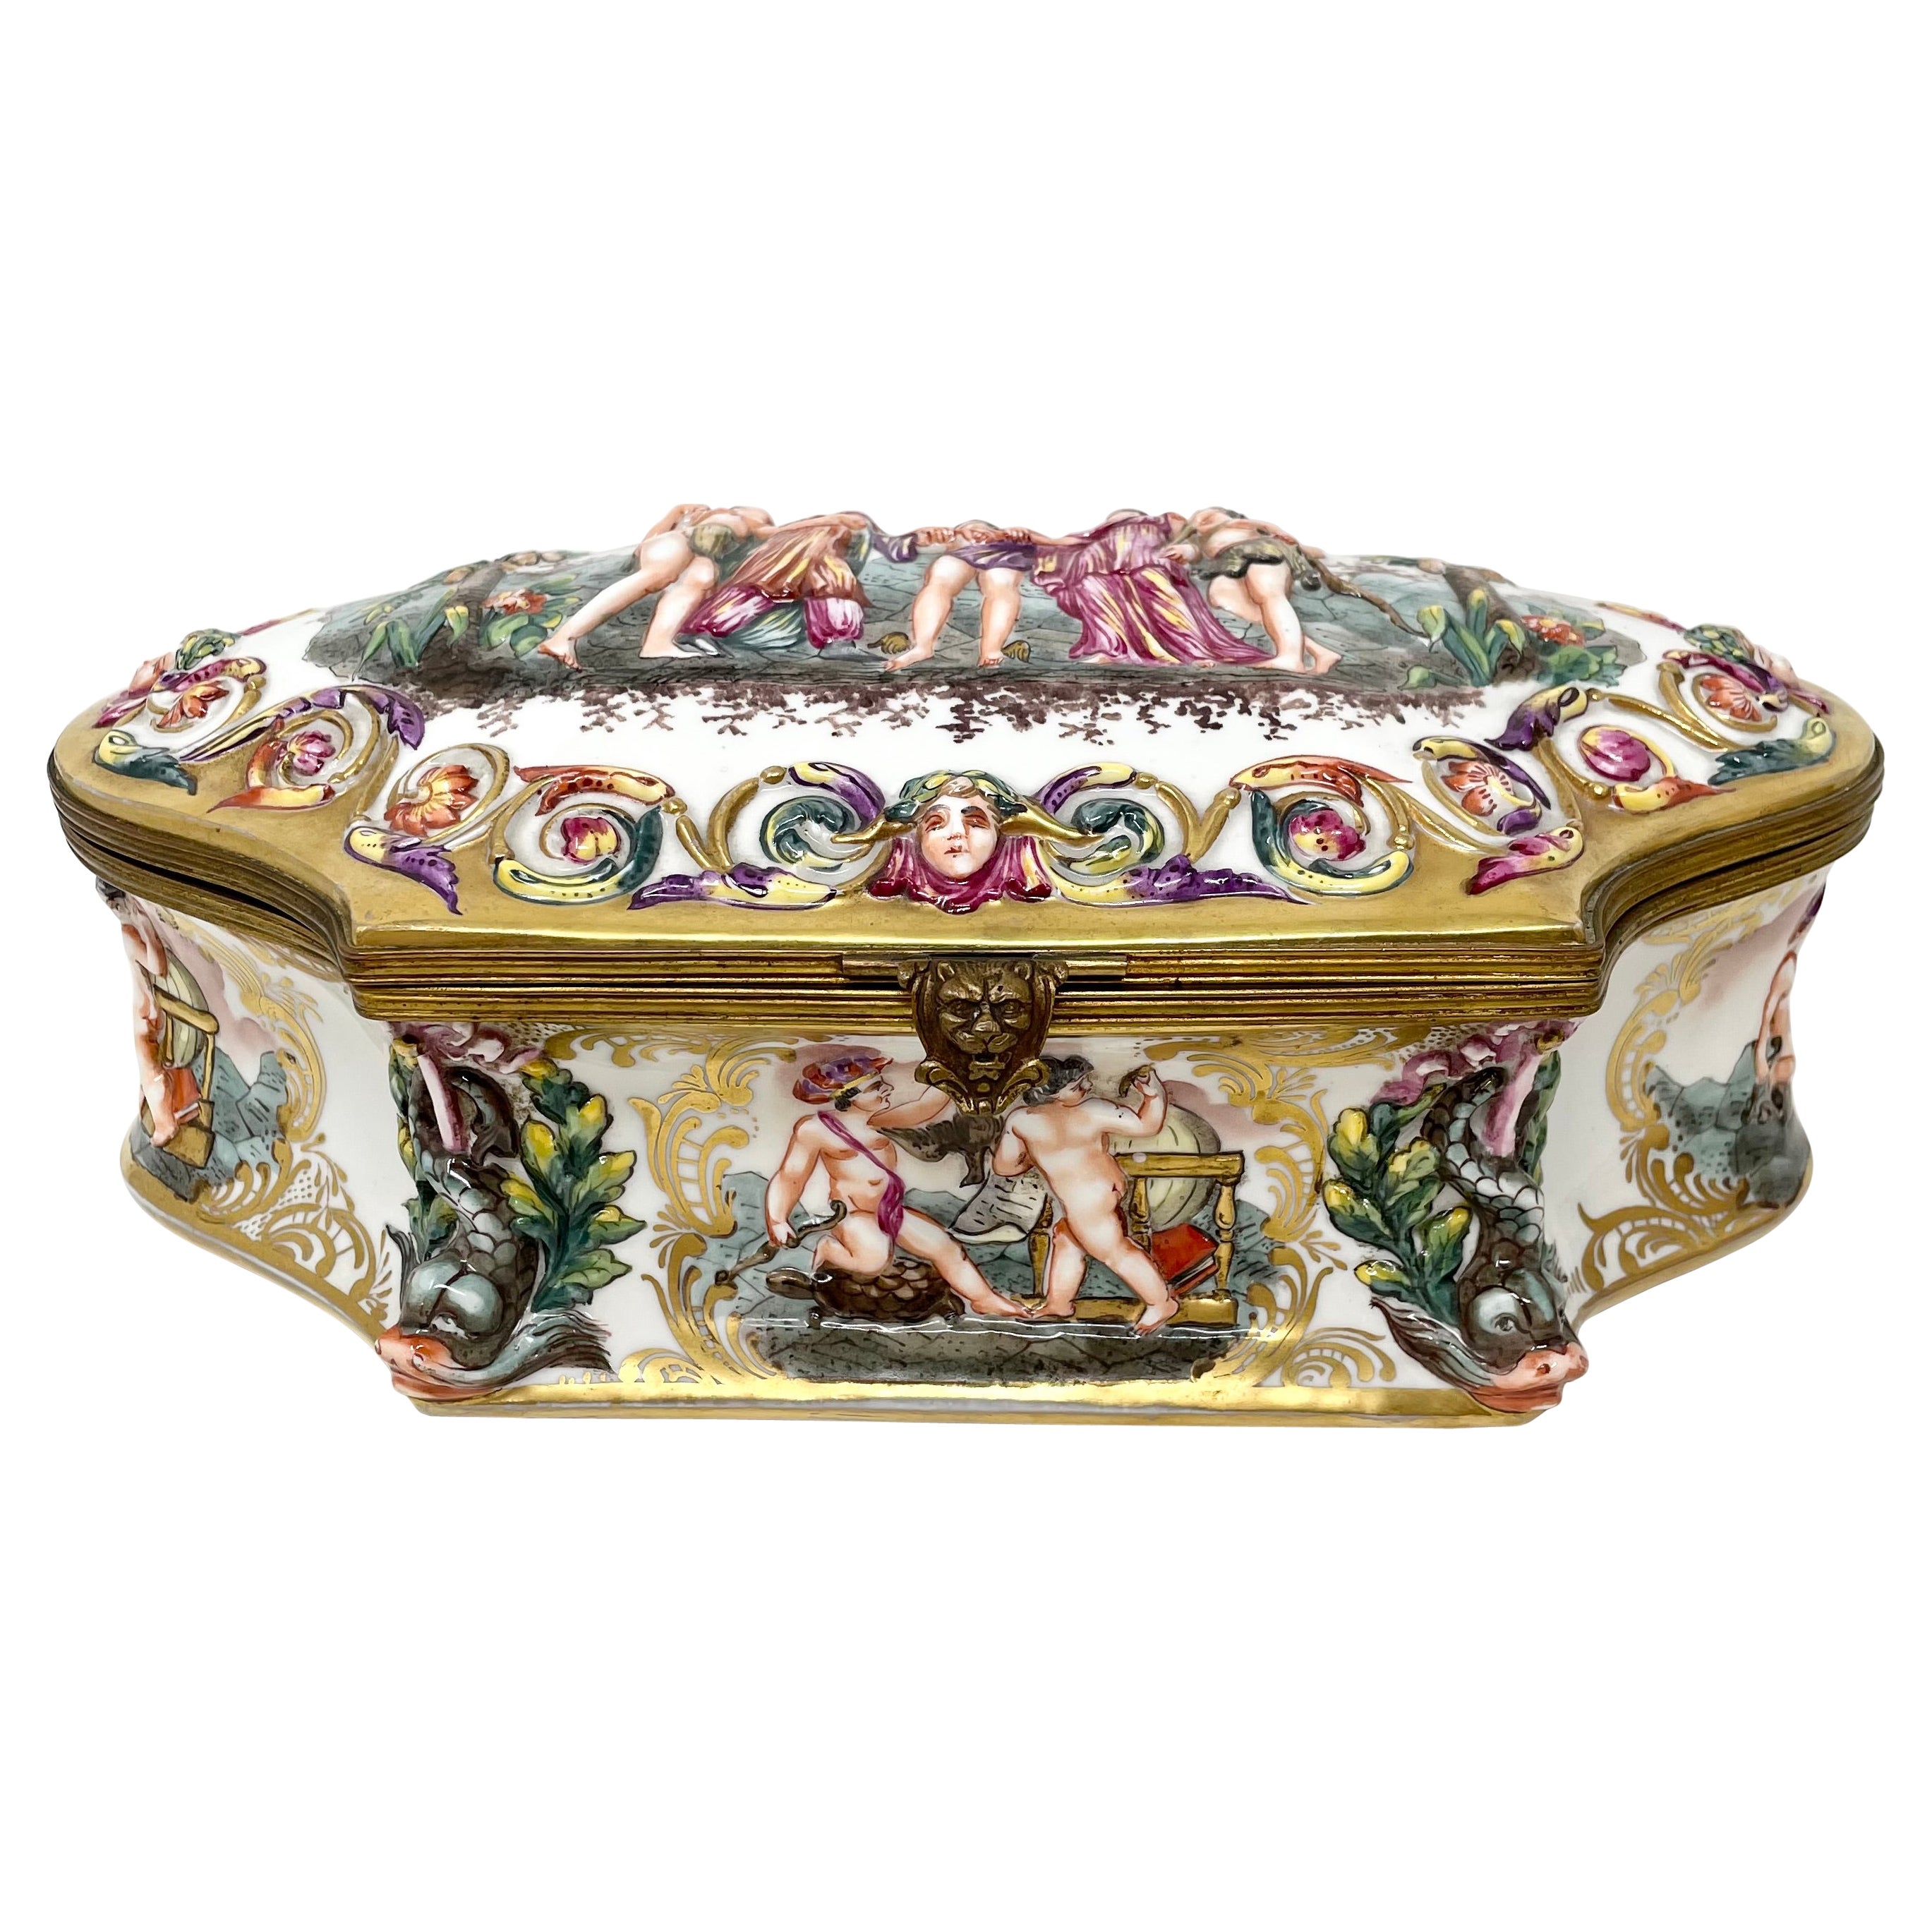 Großes antikes italienisches Capo Di Monte Handbemaltes Porzellan Jewell Box um 1900.